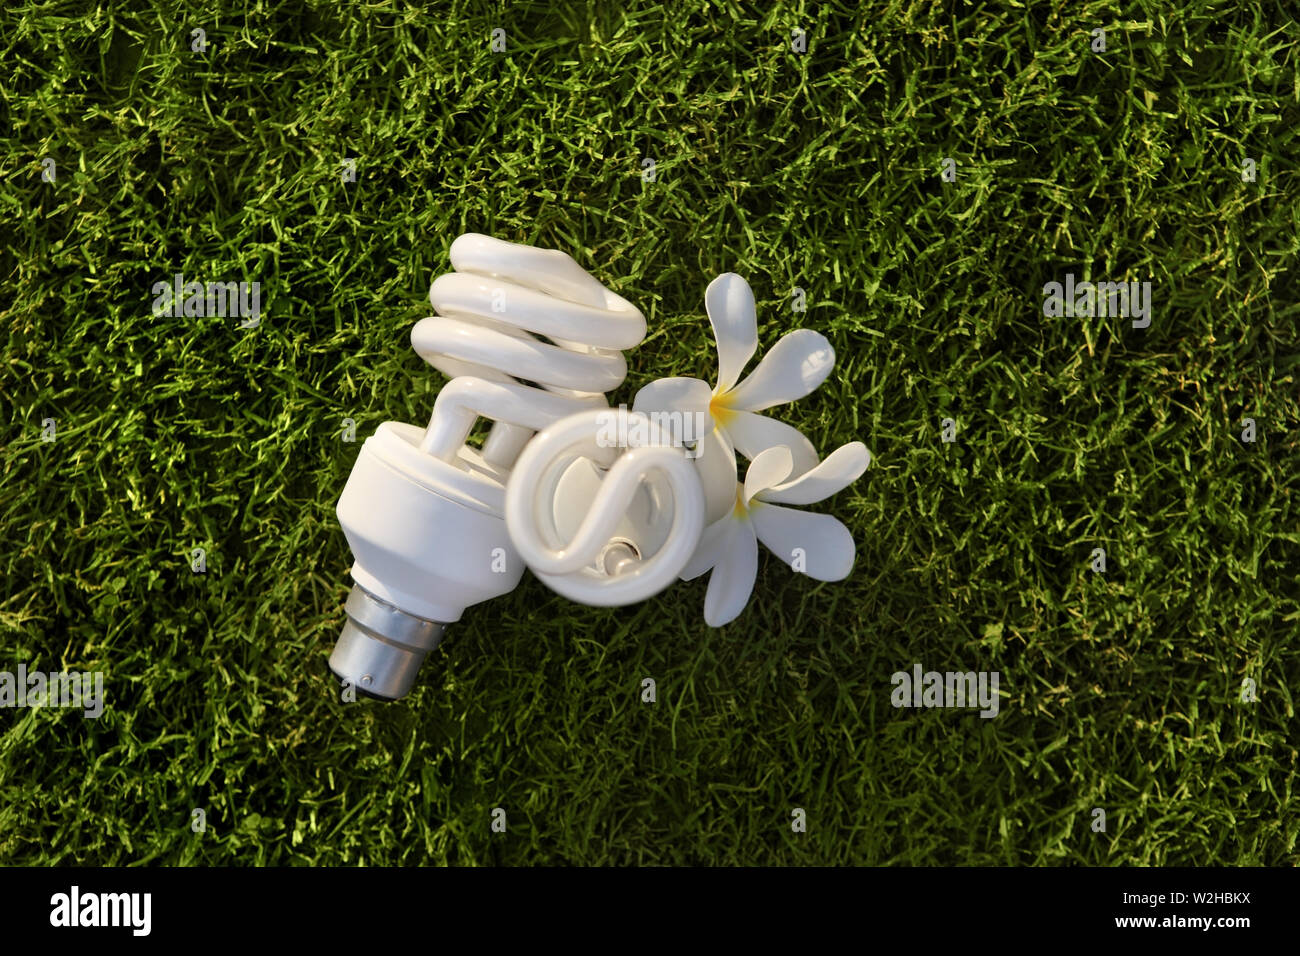 Energy saving lightbulbs in grass Stock Photo